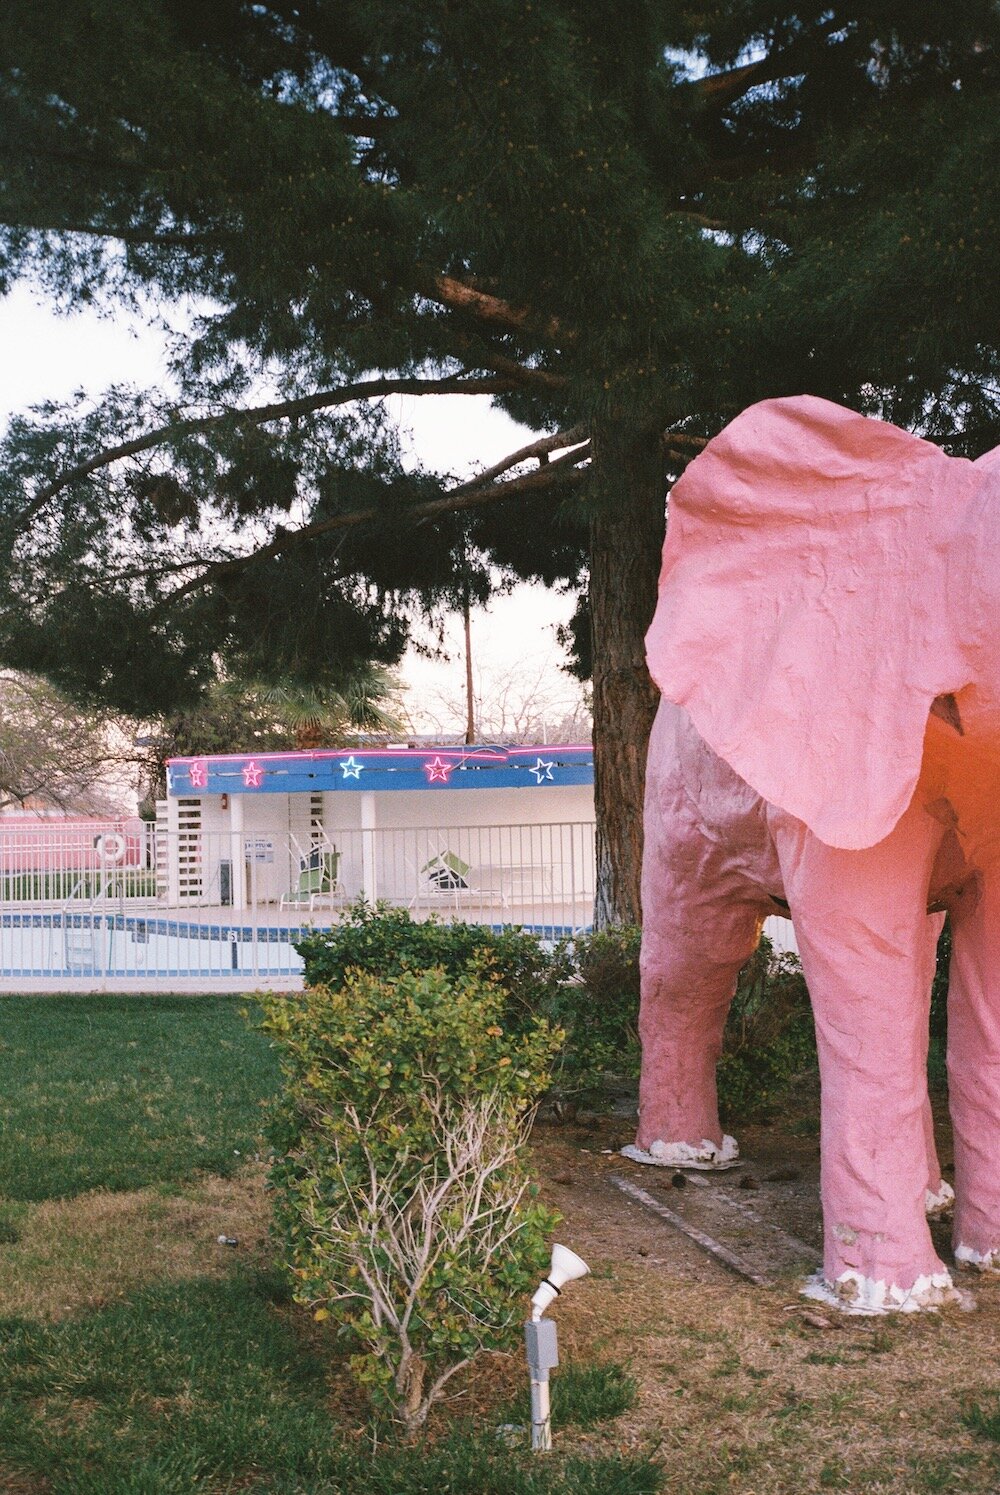 downtown las vegas wedding chapel pink elephant showgirl00010.jpeg